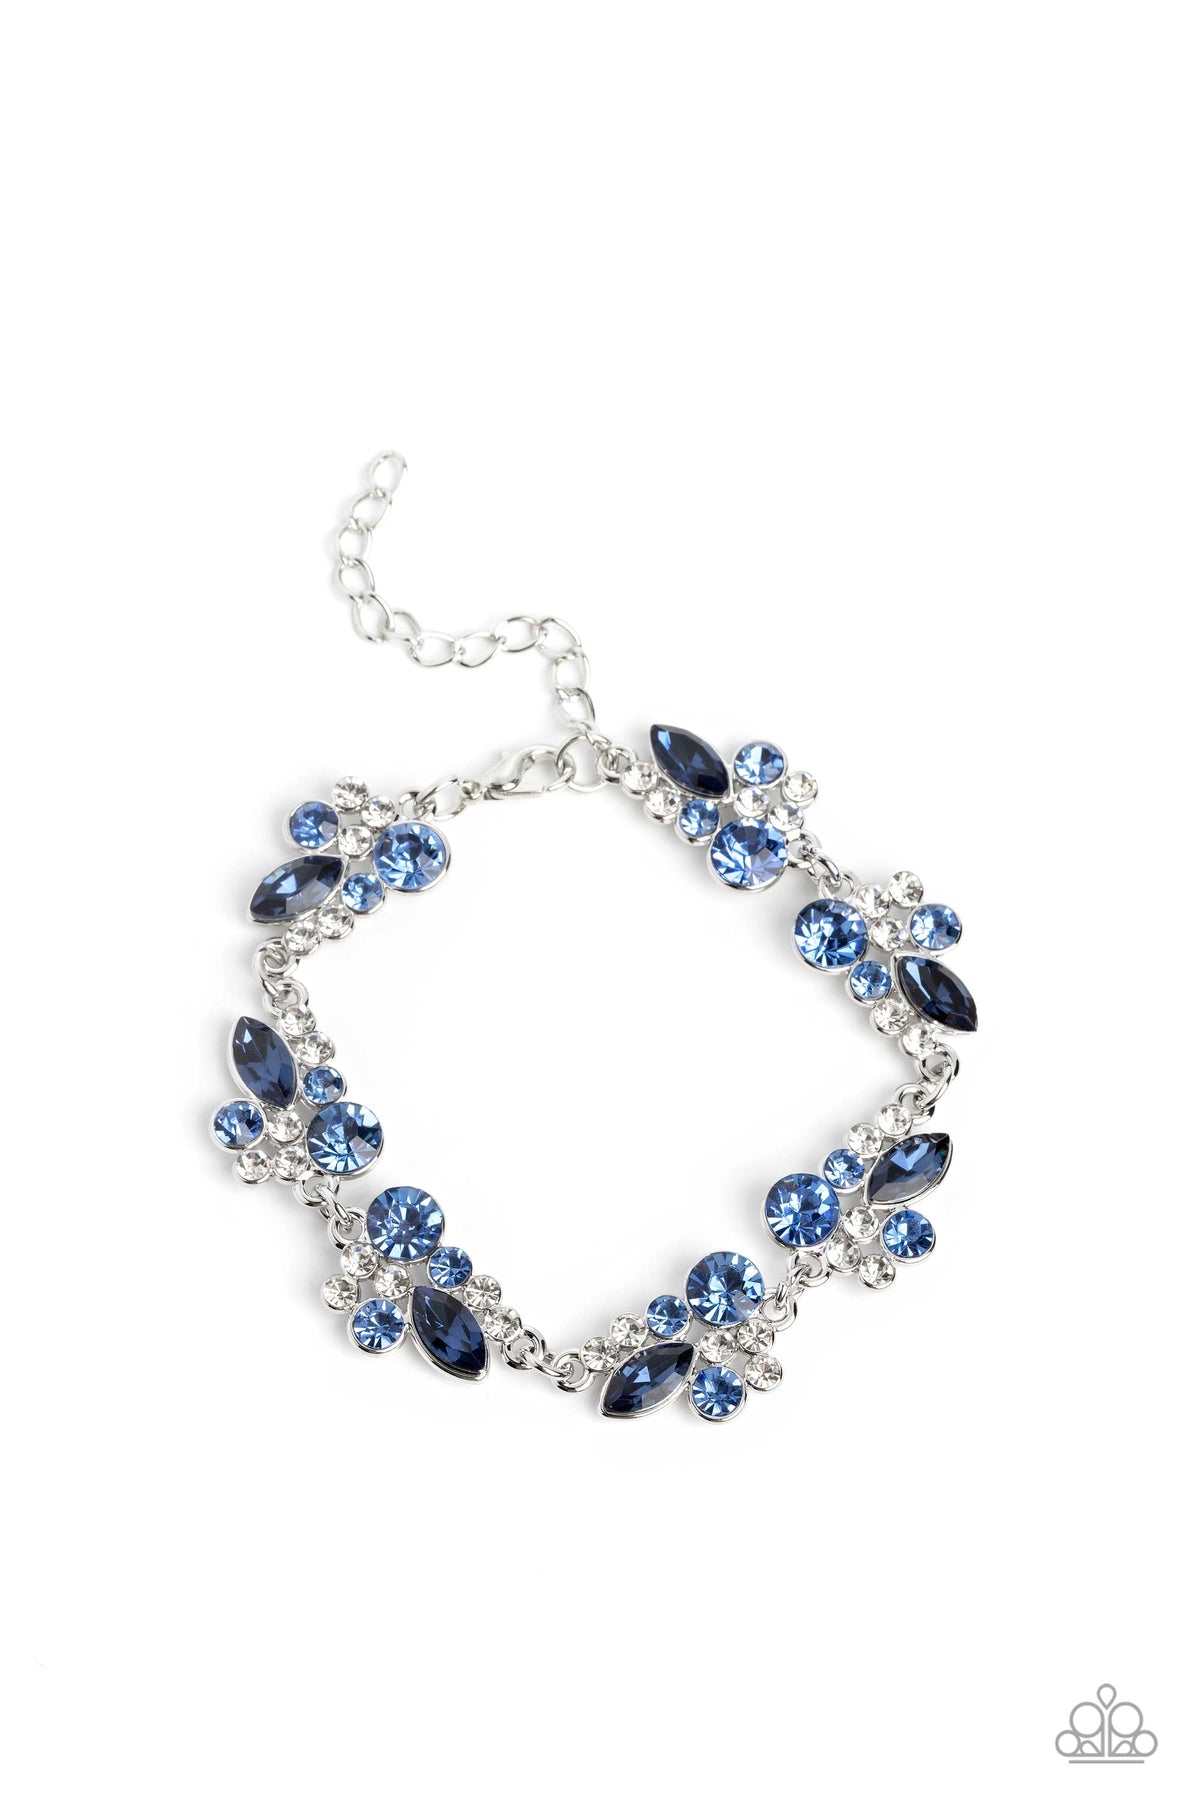 Poolside Perfection Blue Rhinestone Bracelet - Paparazzi Accessories- lightbox - CarasShop.com - $5 Jewelry by Cara Jewels